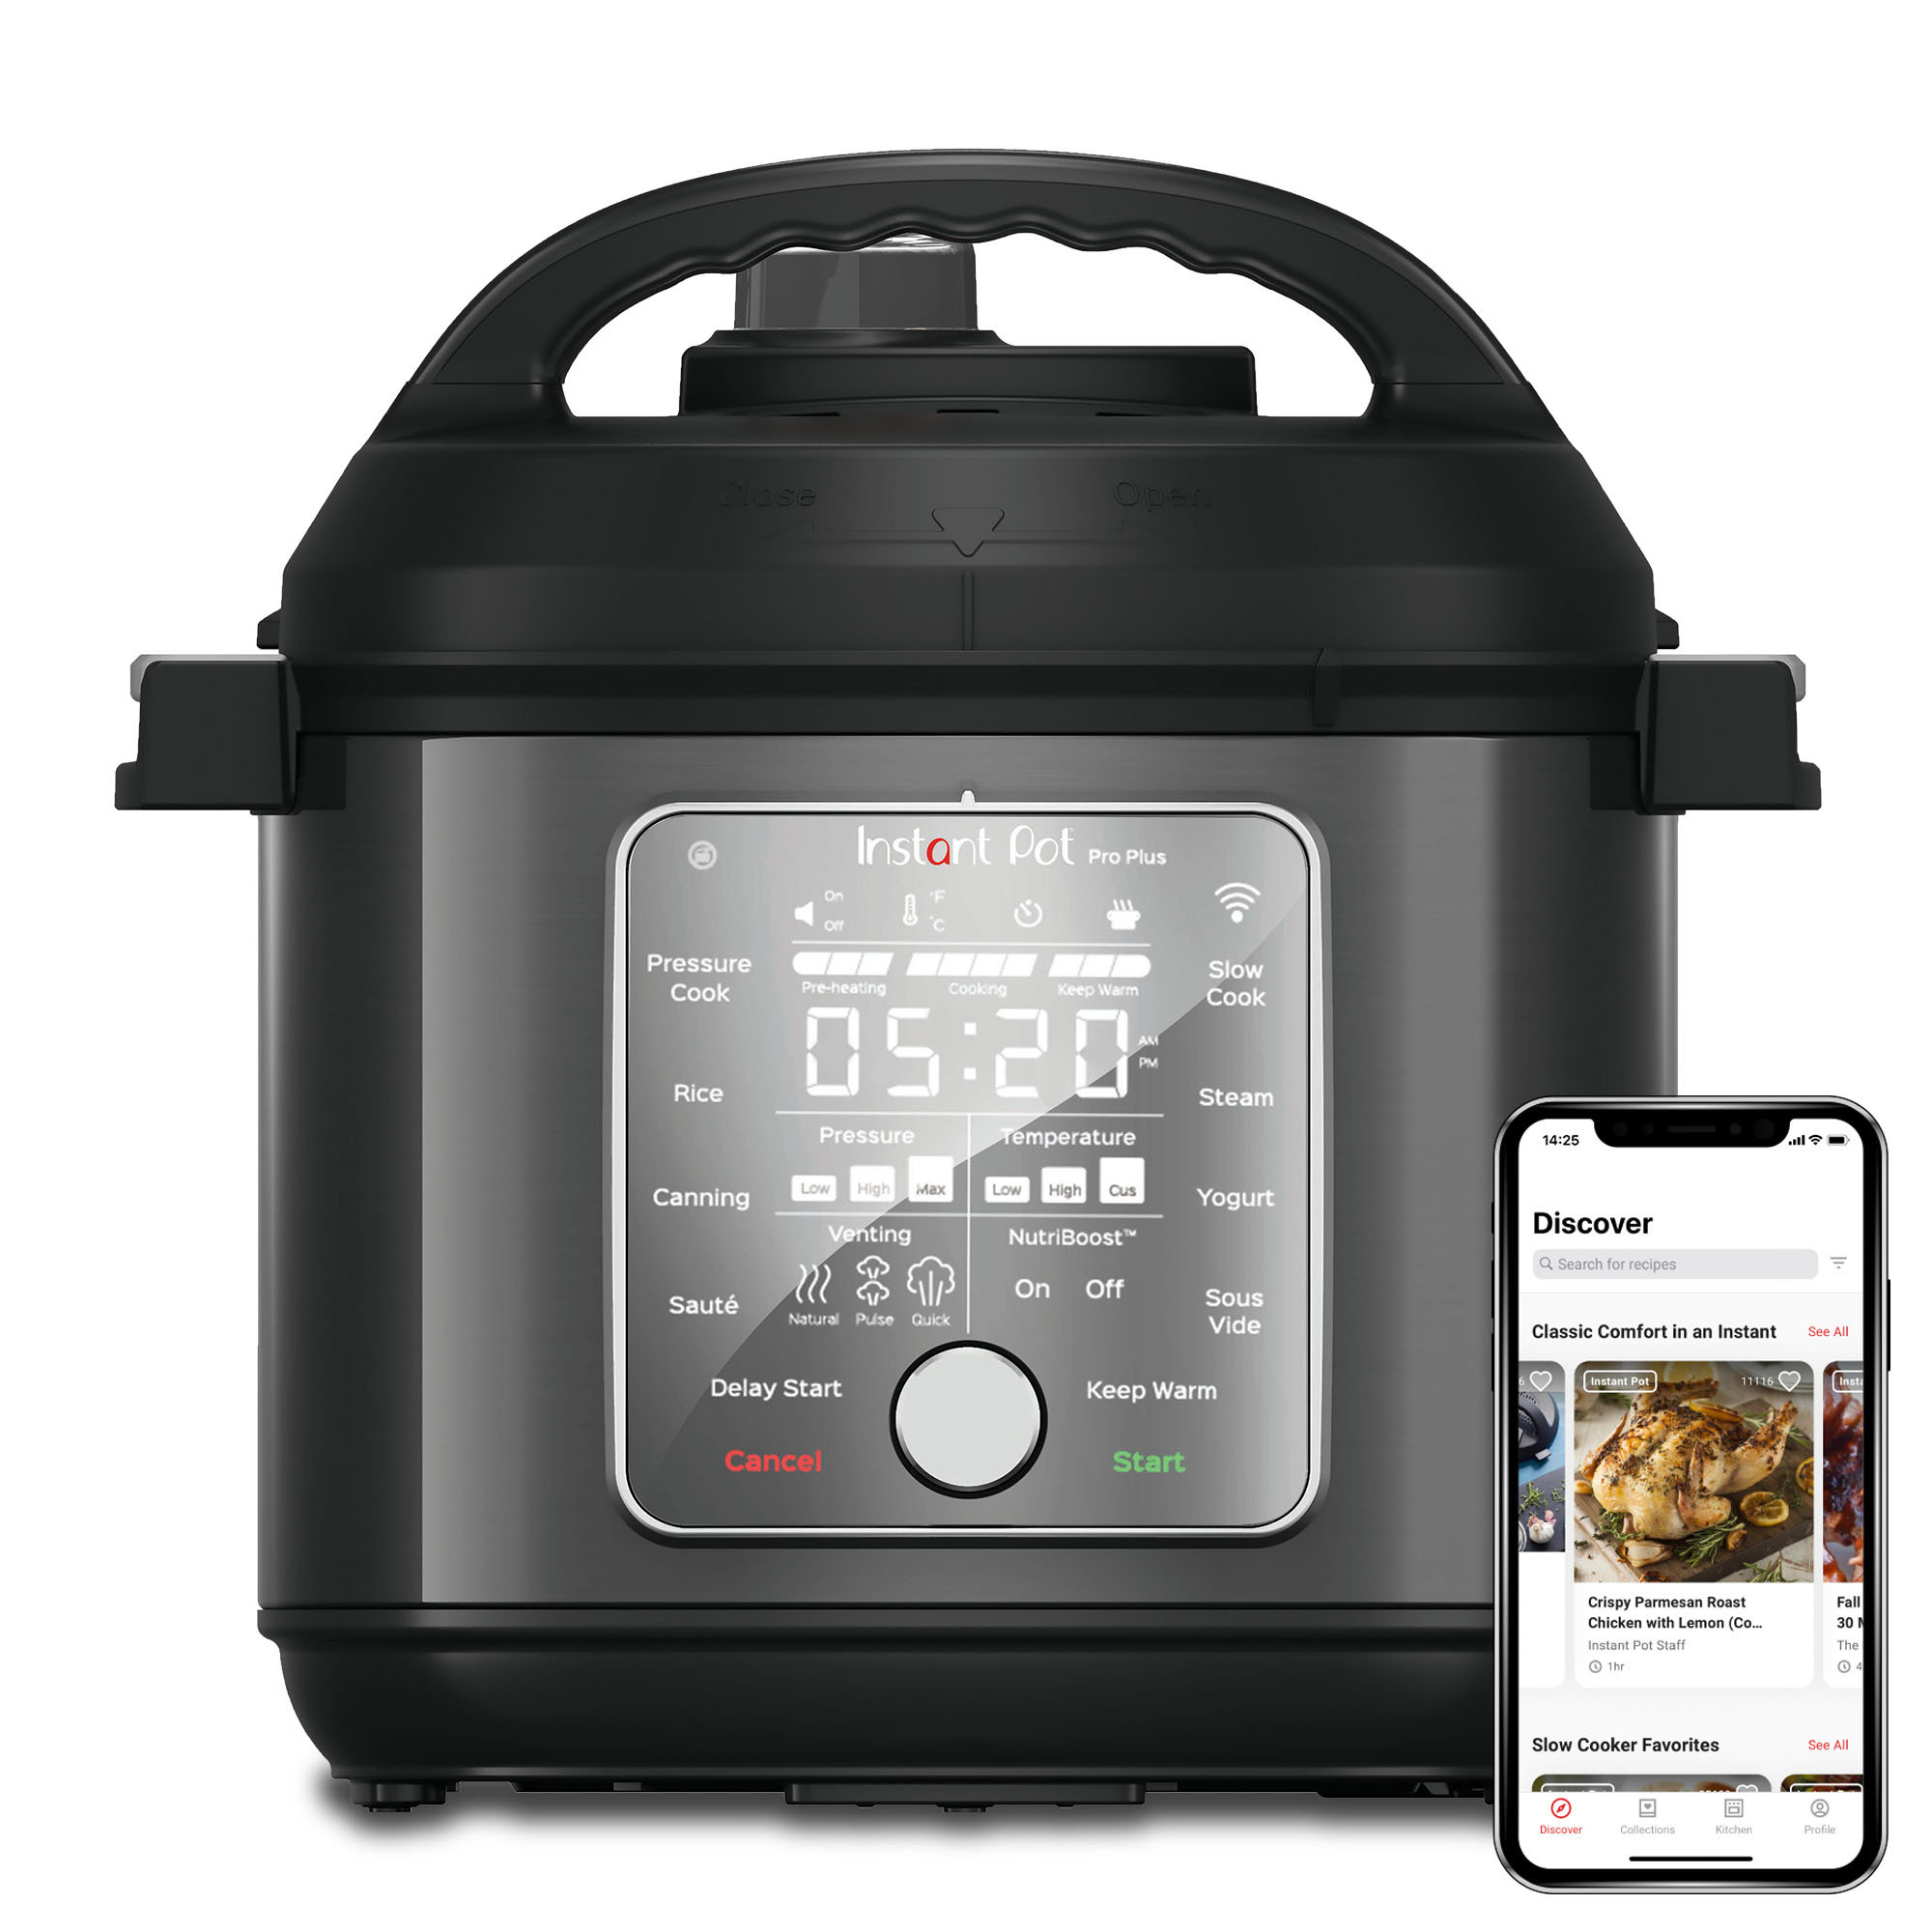 Instant Pot Max 6 Qt Electric Pressure Cooker 9-in-1 Multicooker